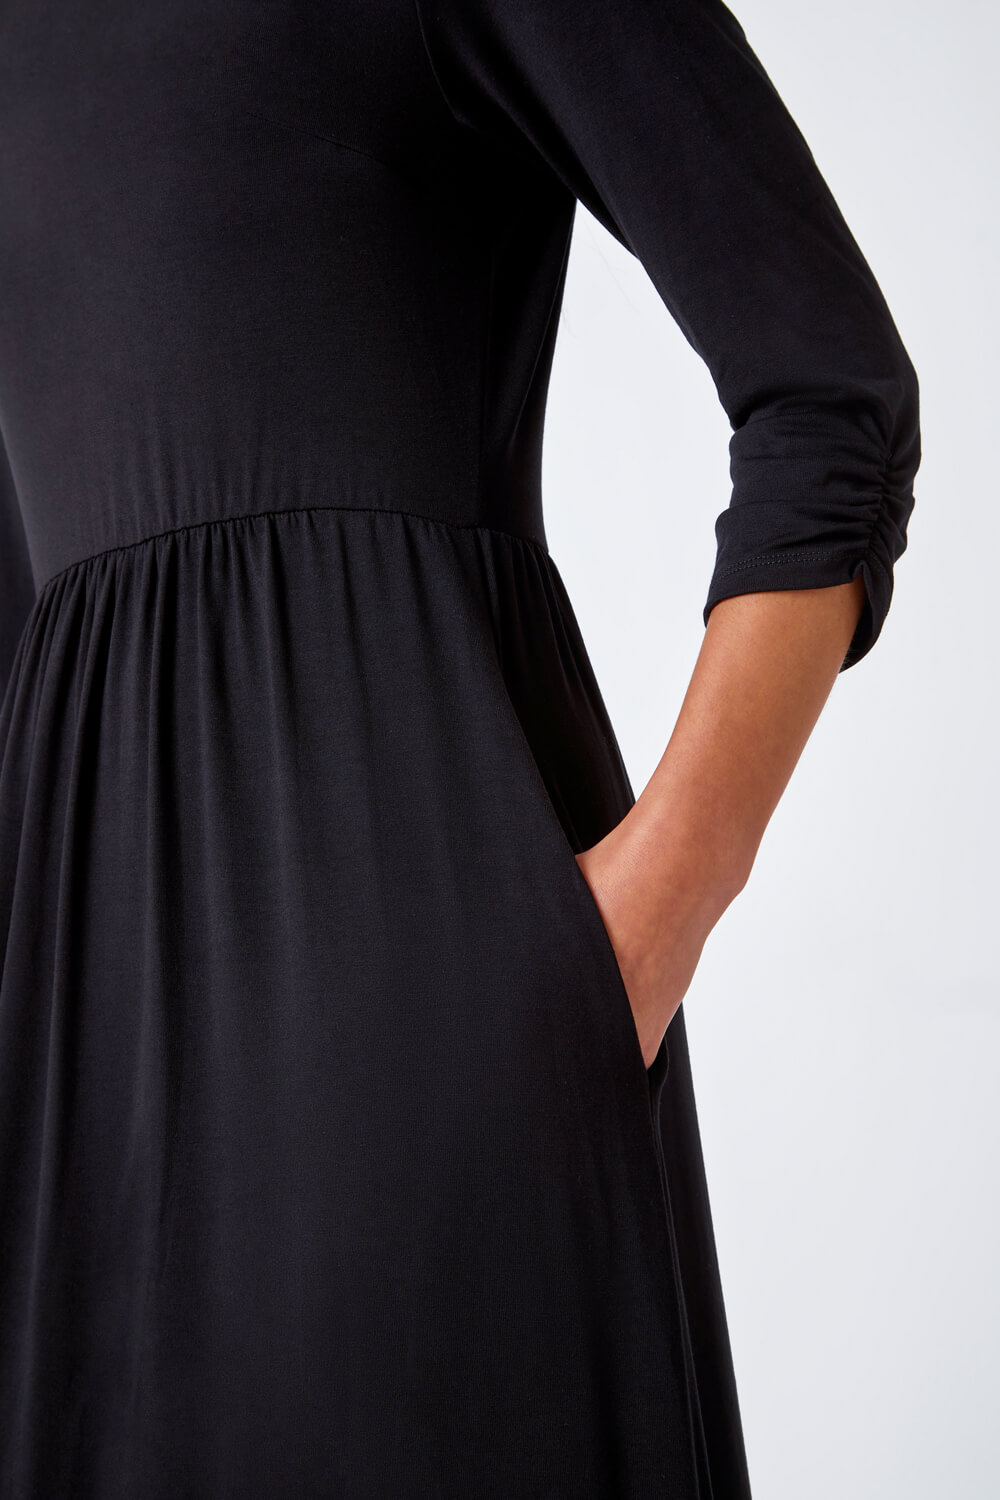 Black Petite Stretch Jersey Midi Dress, Image 5 of 5